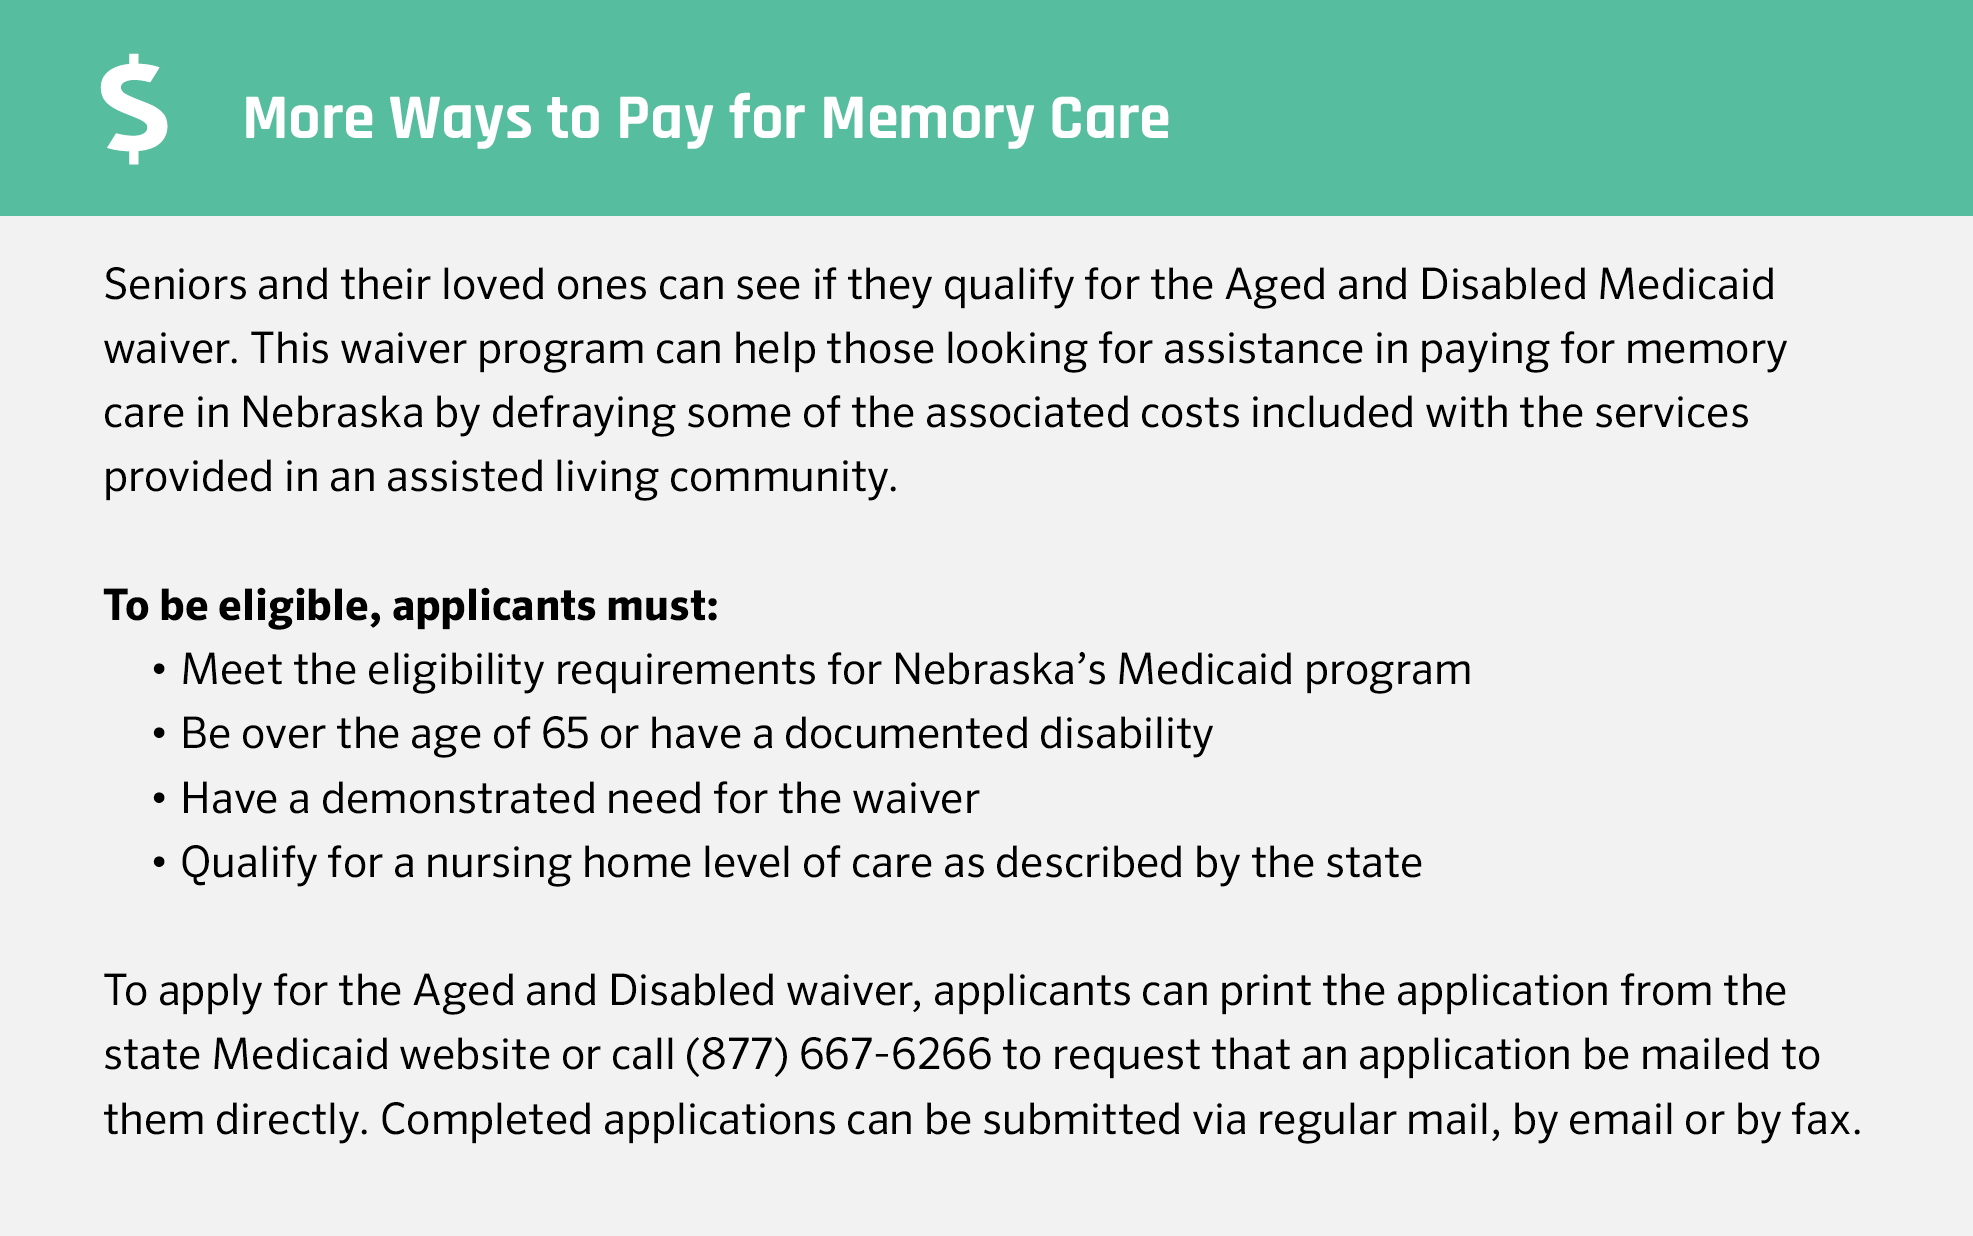 Memory care financial assistance in Nebraska